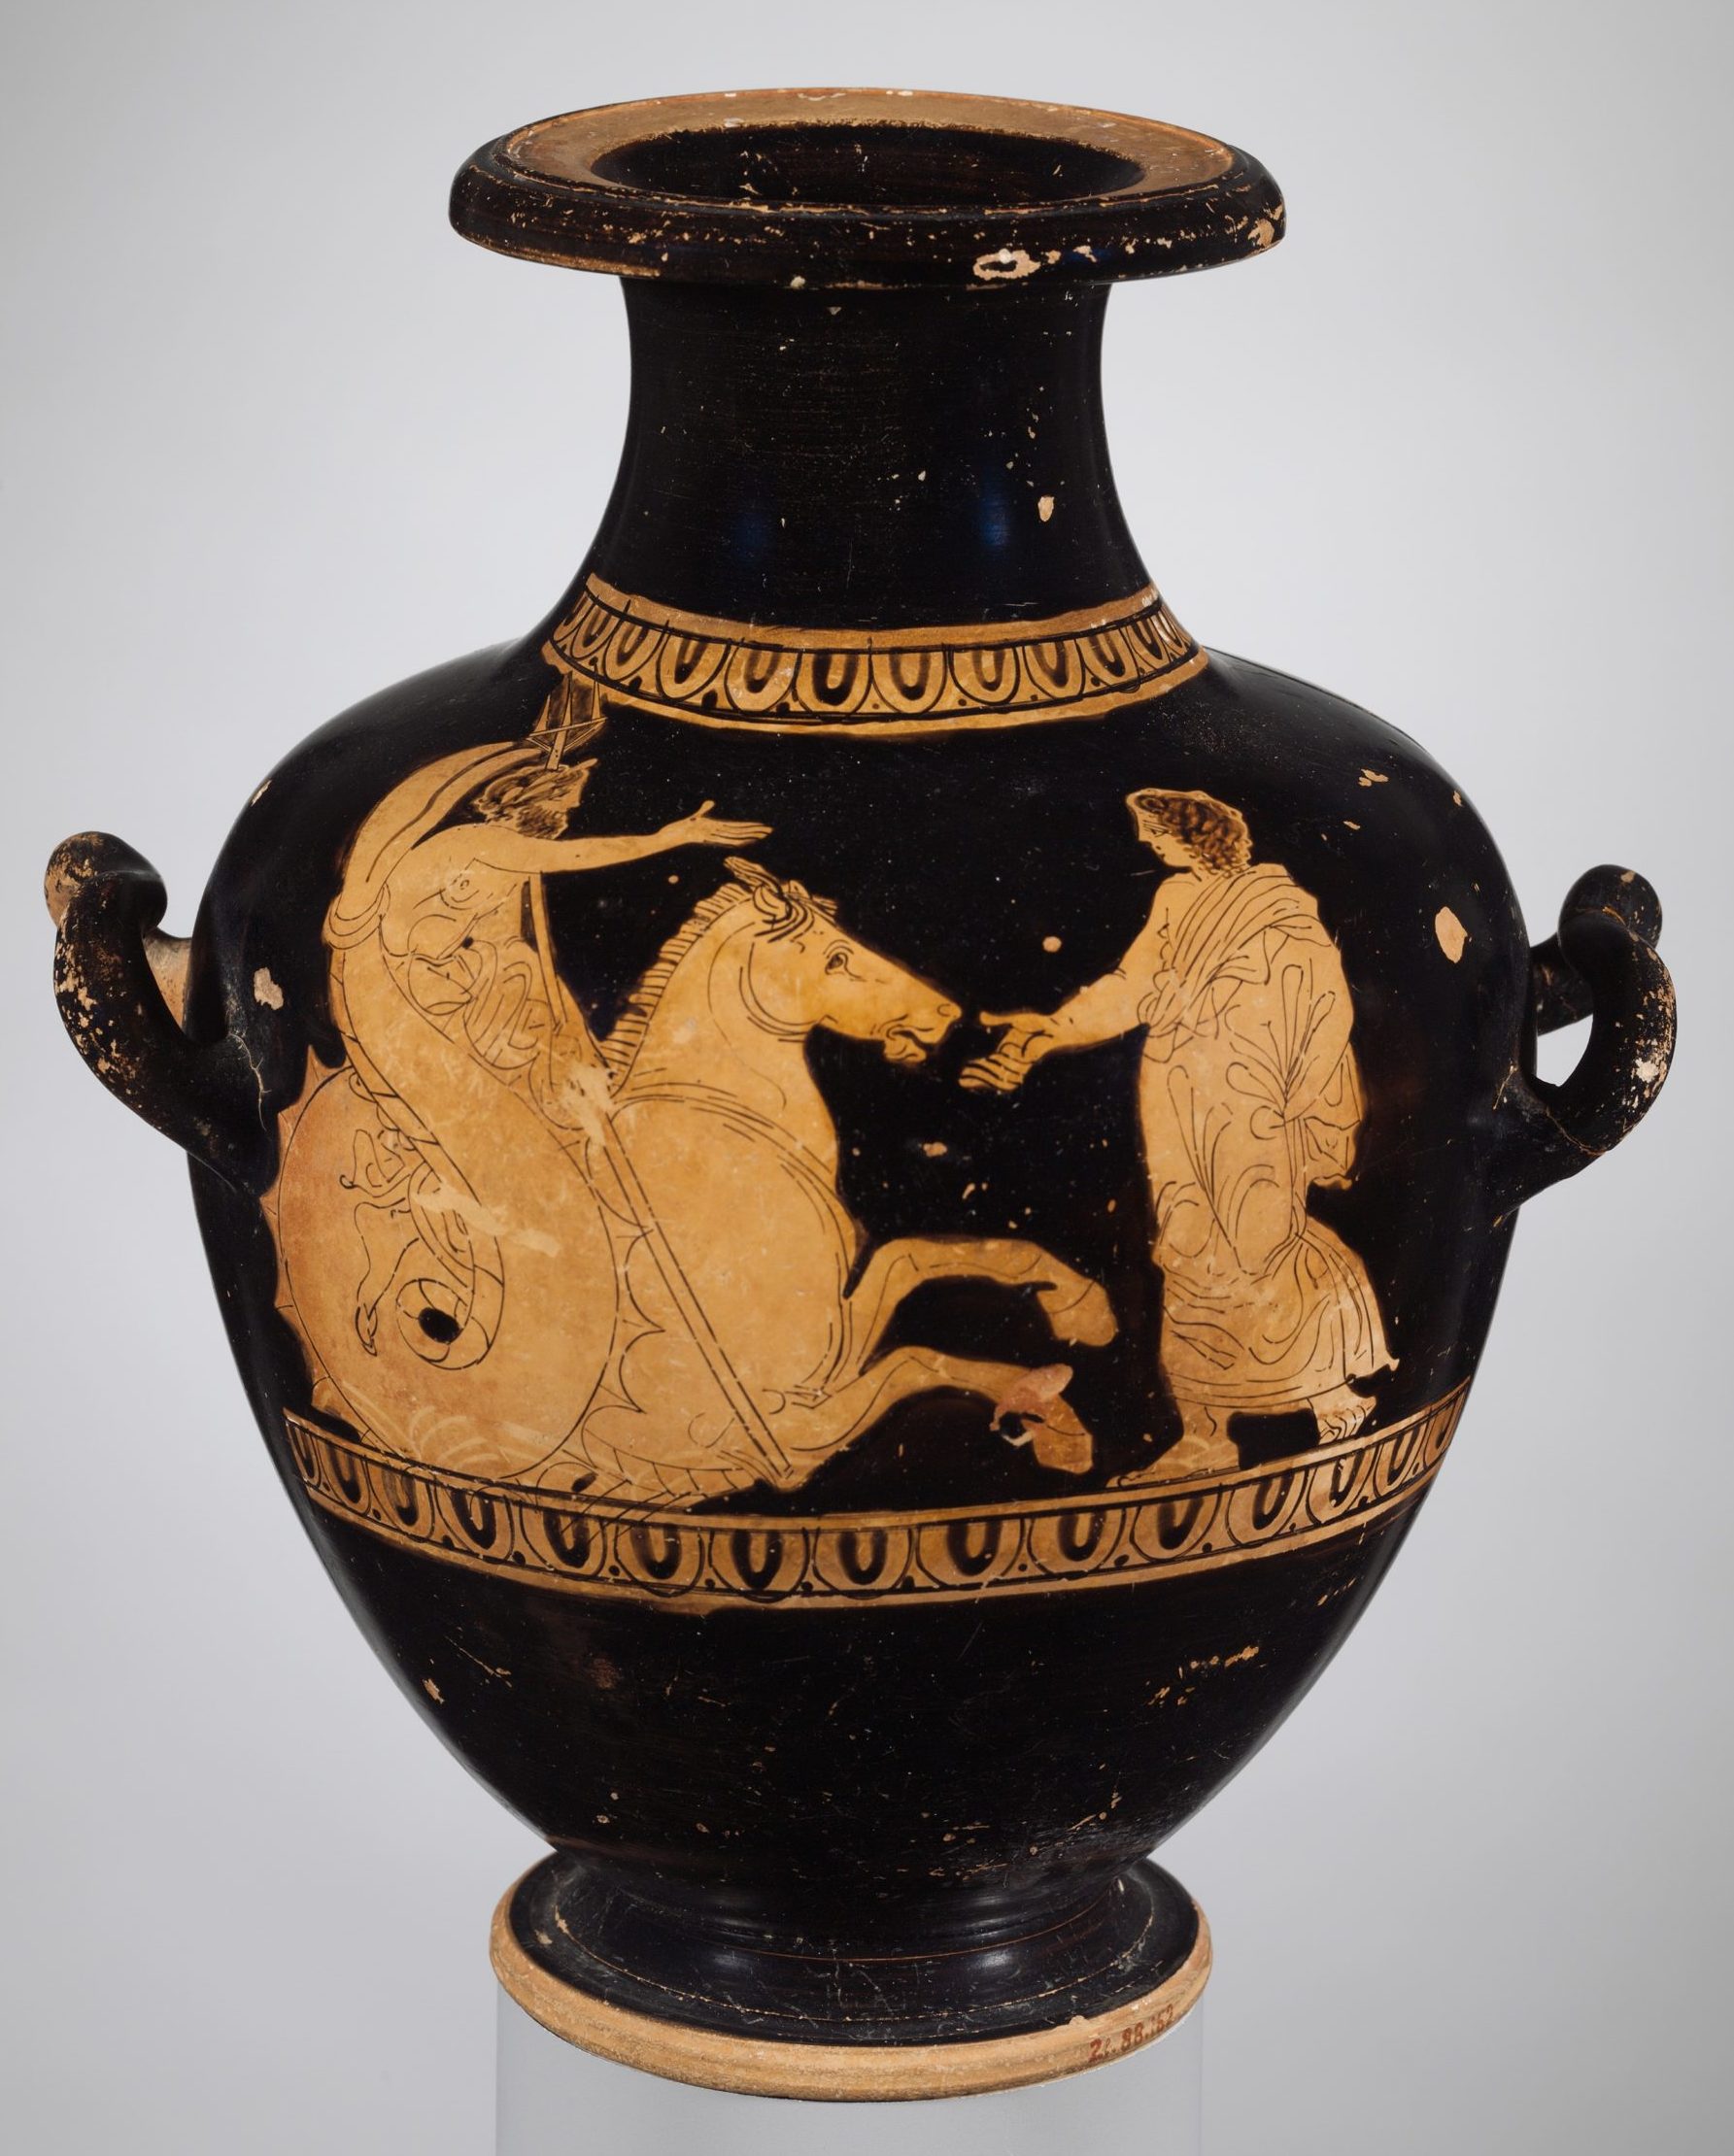 Poseidon on a horse, accompanied by the youthful Pelops.